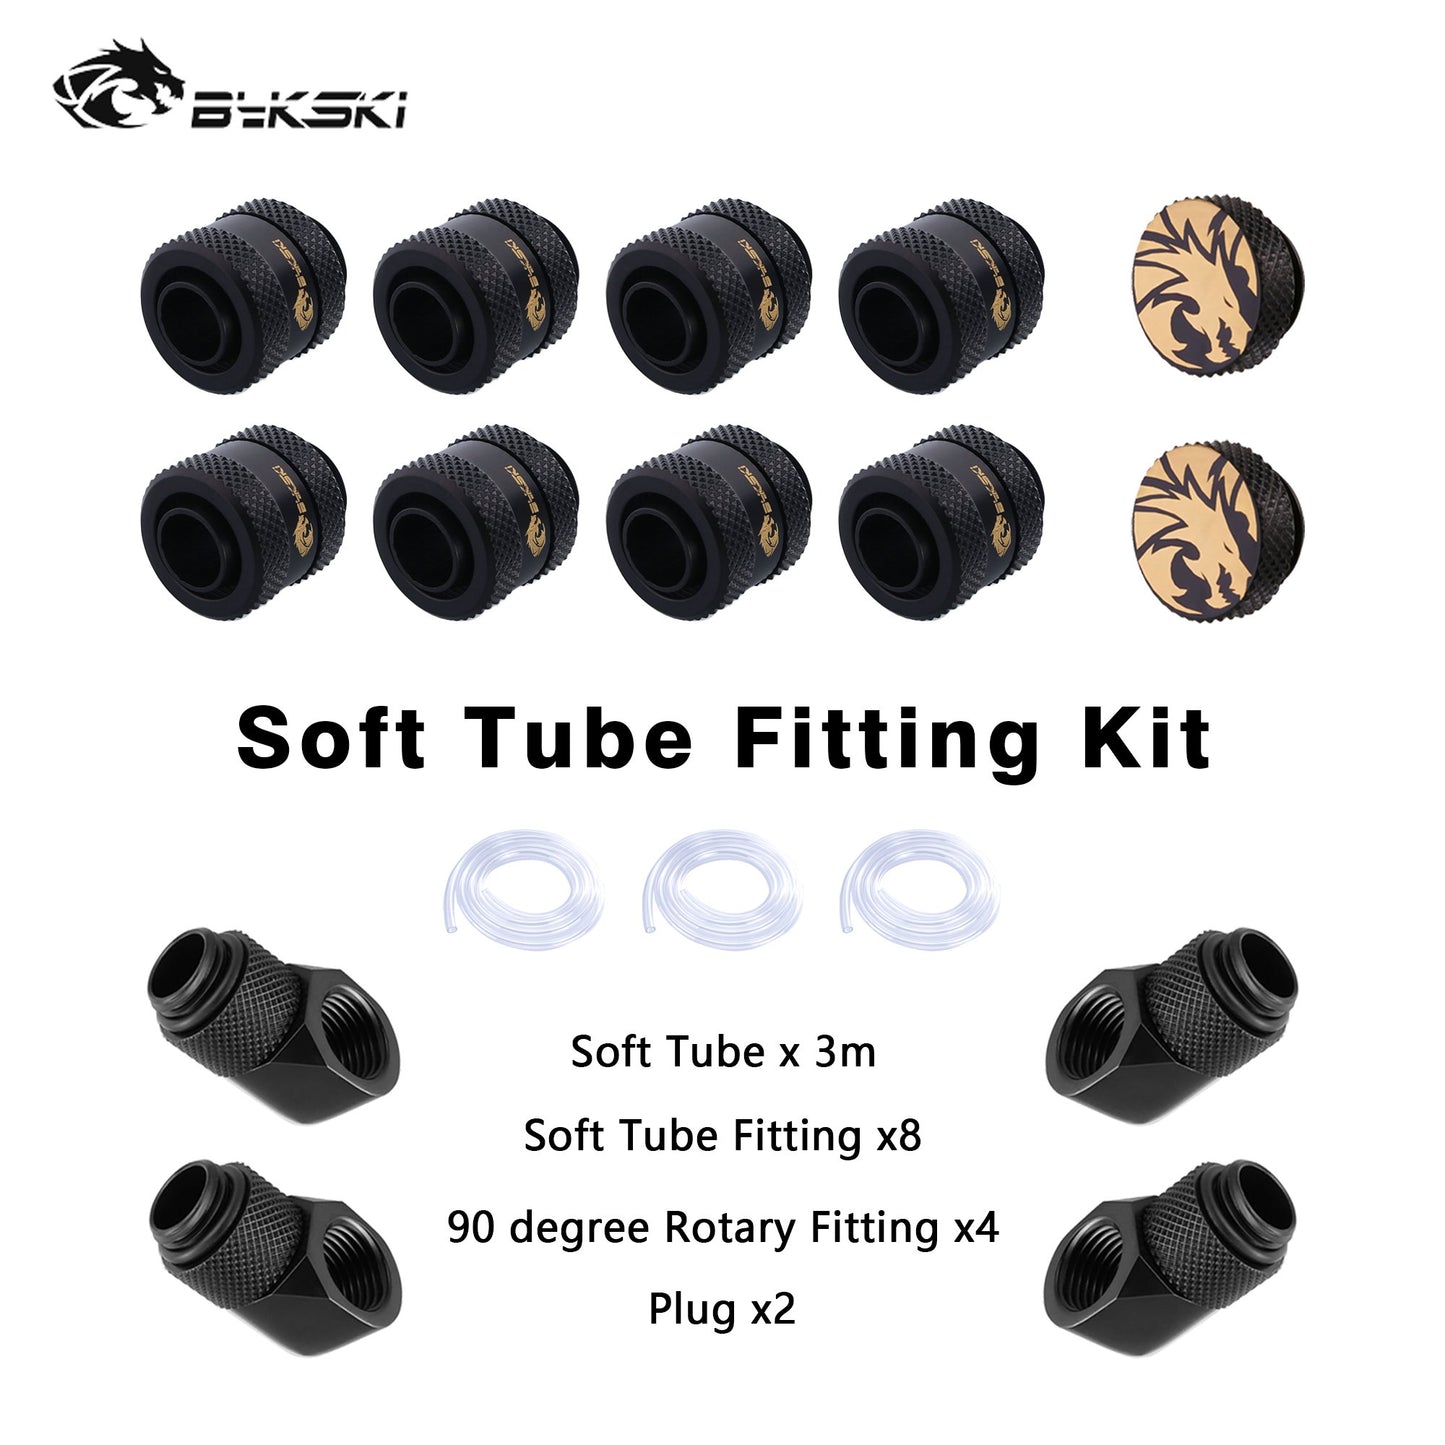 Bykski soft Tube Hose Fitting Kit Set, OD 10*13,10*16MM, 90 degree, Plug, For Computer Water Cooling system, BY-STK